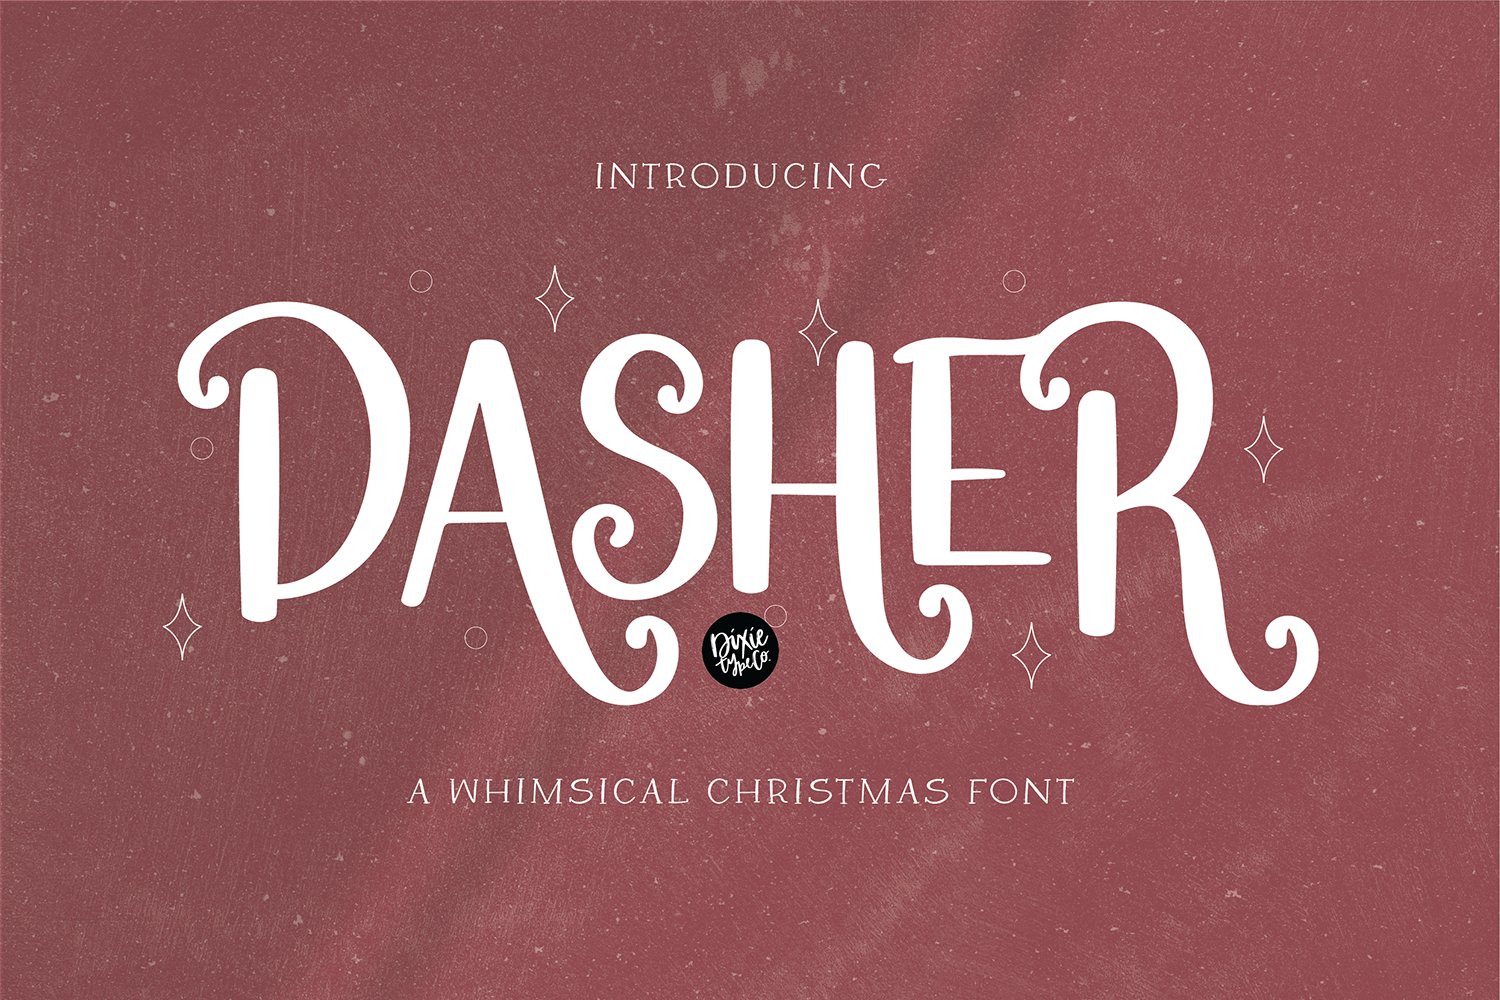 DASHER Farmhouse Christmas Font cover image.